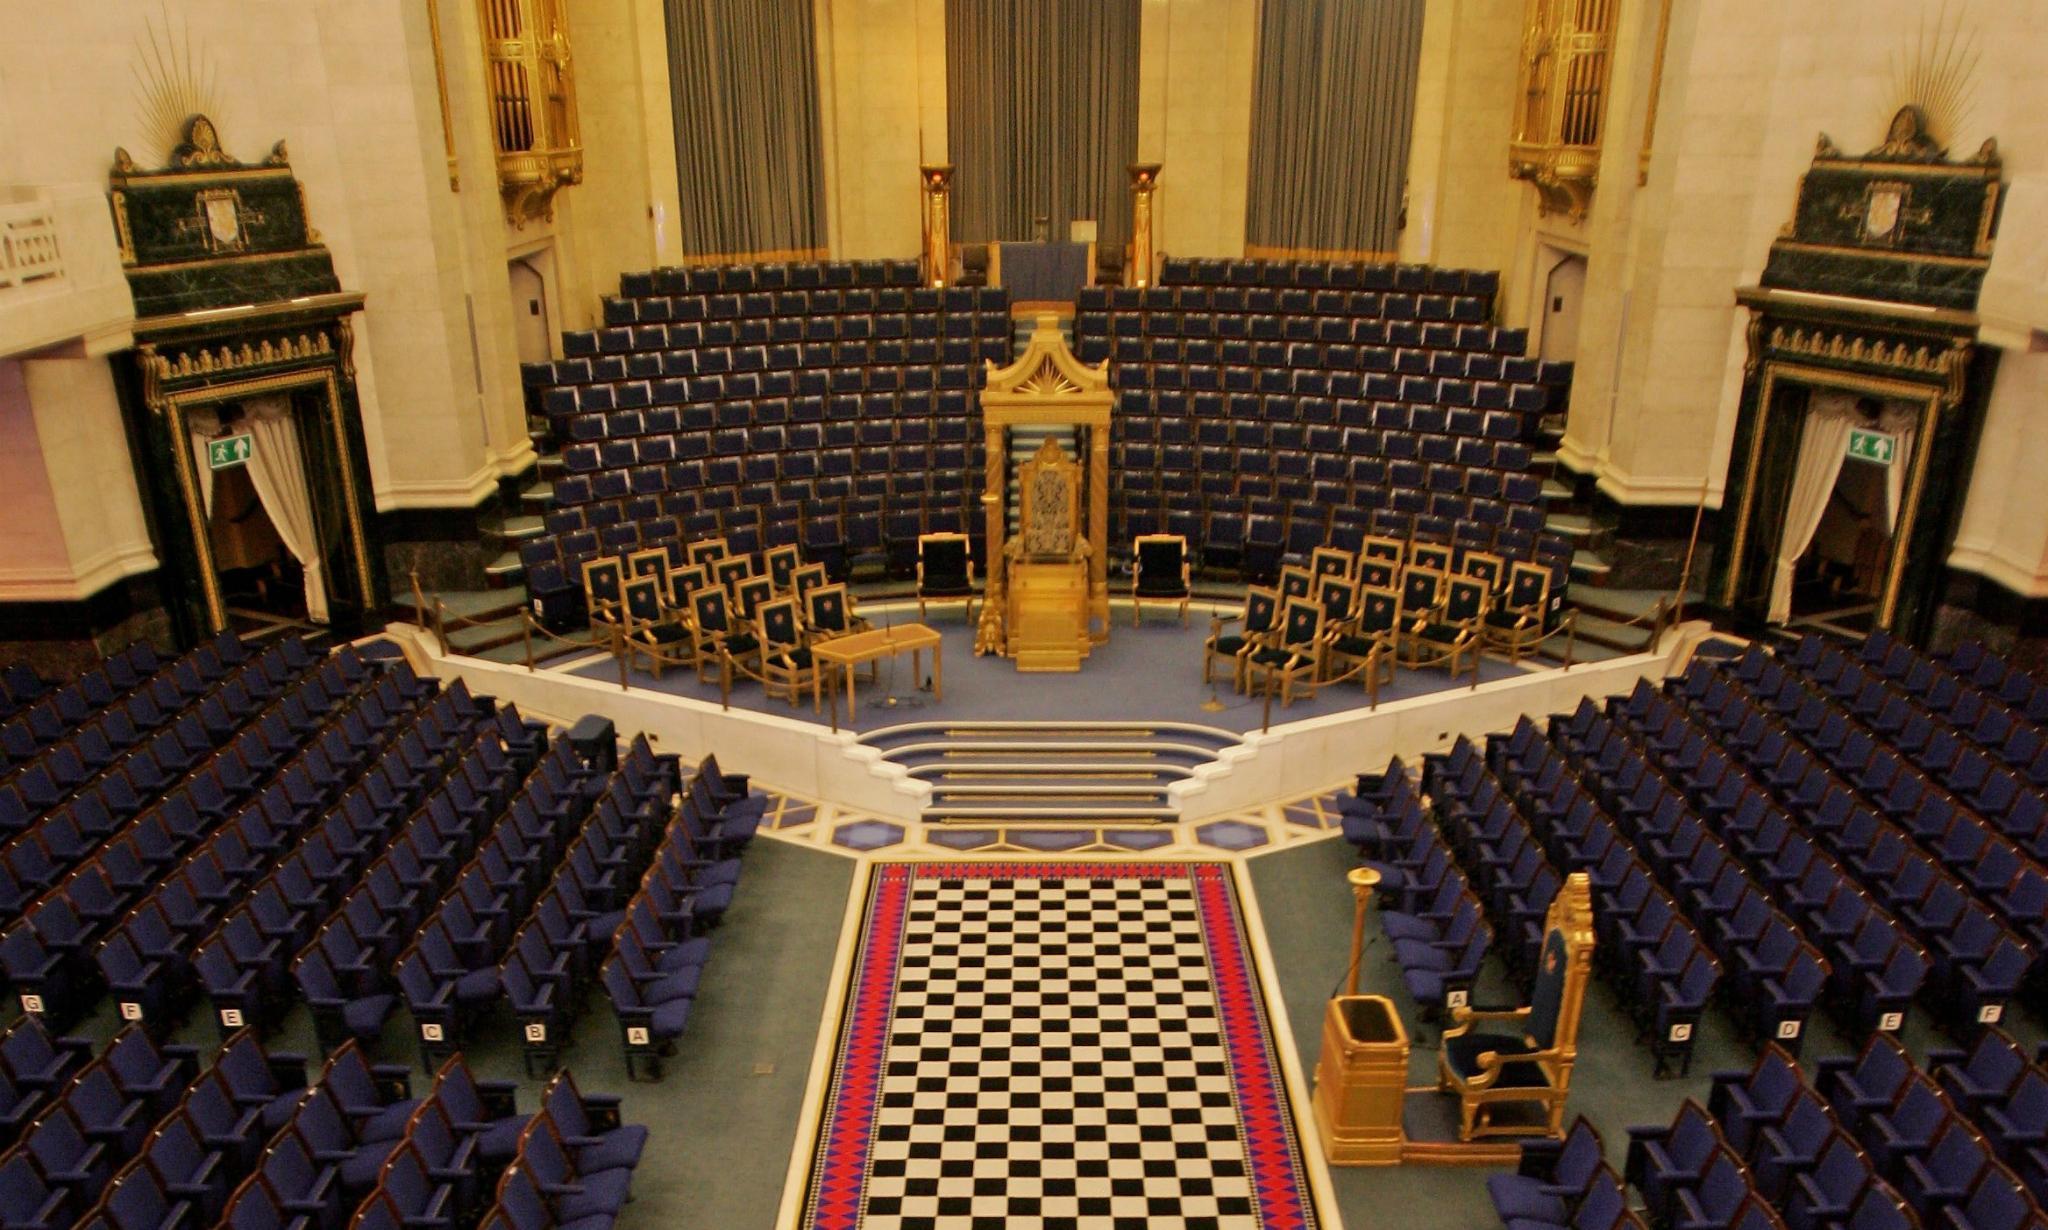 The Grand Temple inside the London Freemasons’ Hall